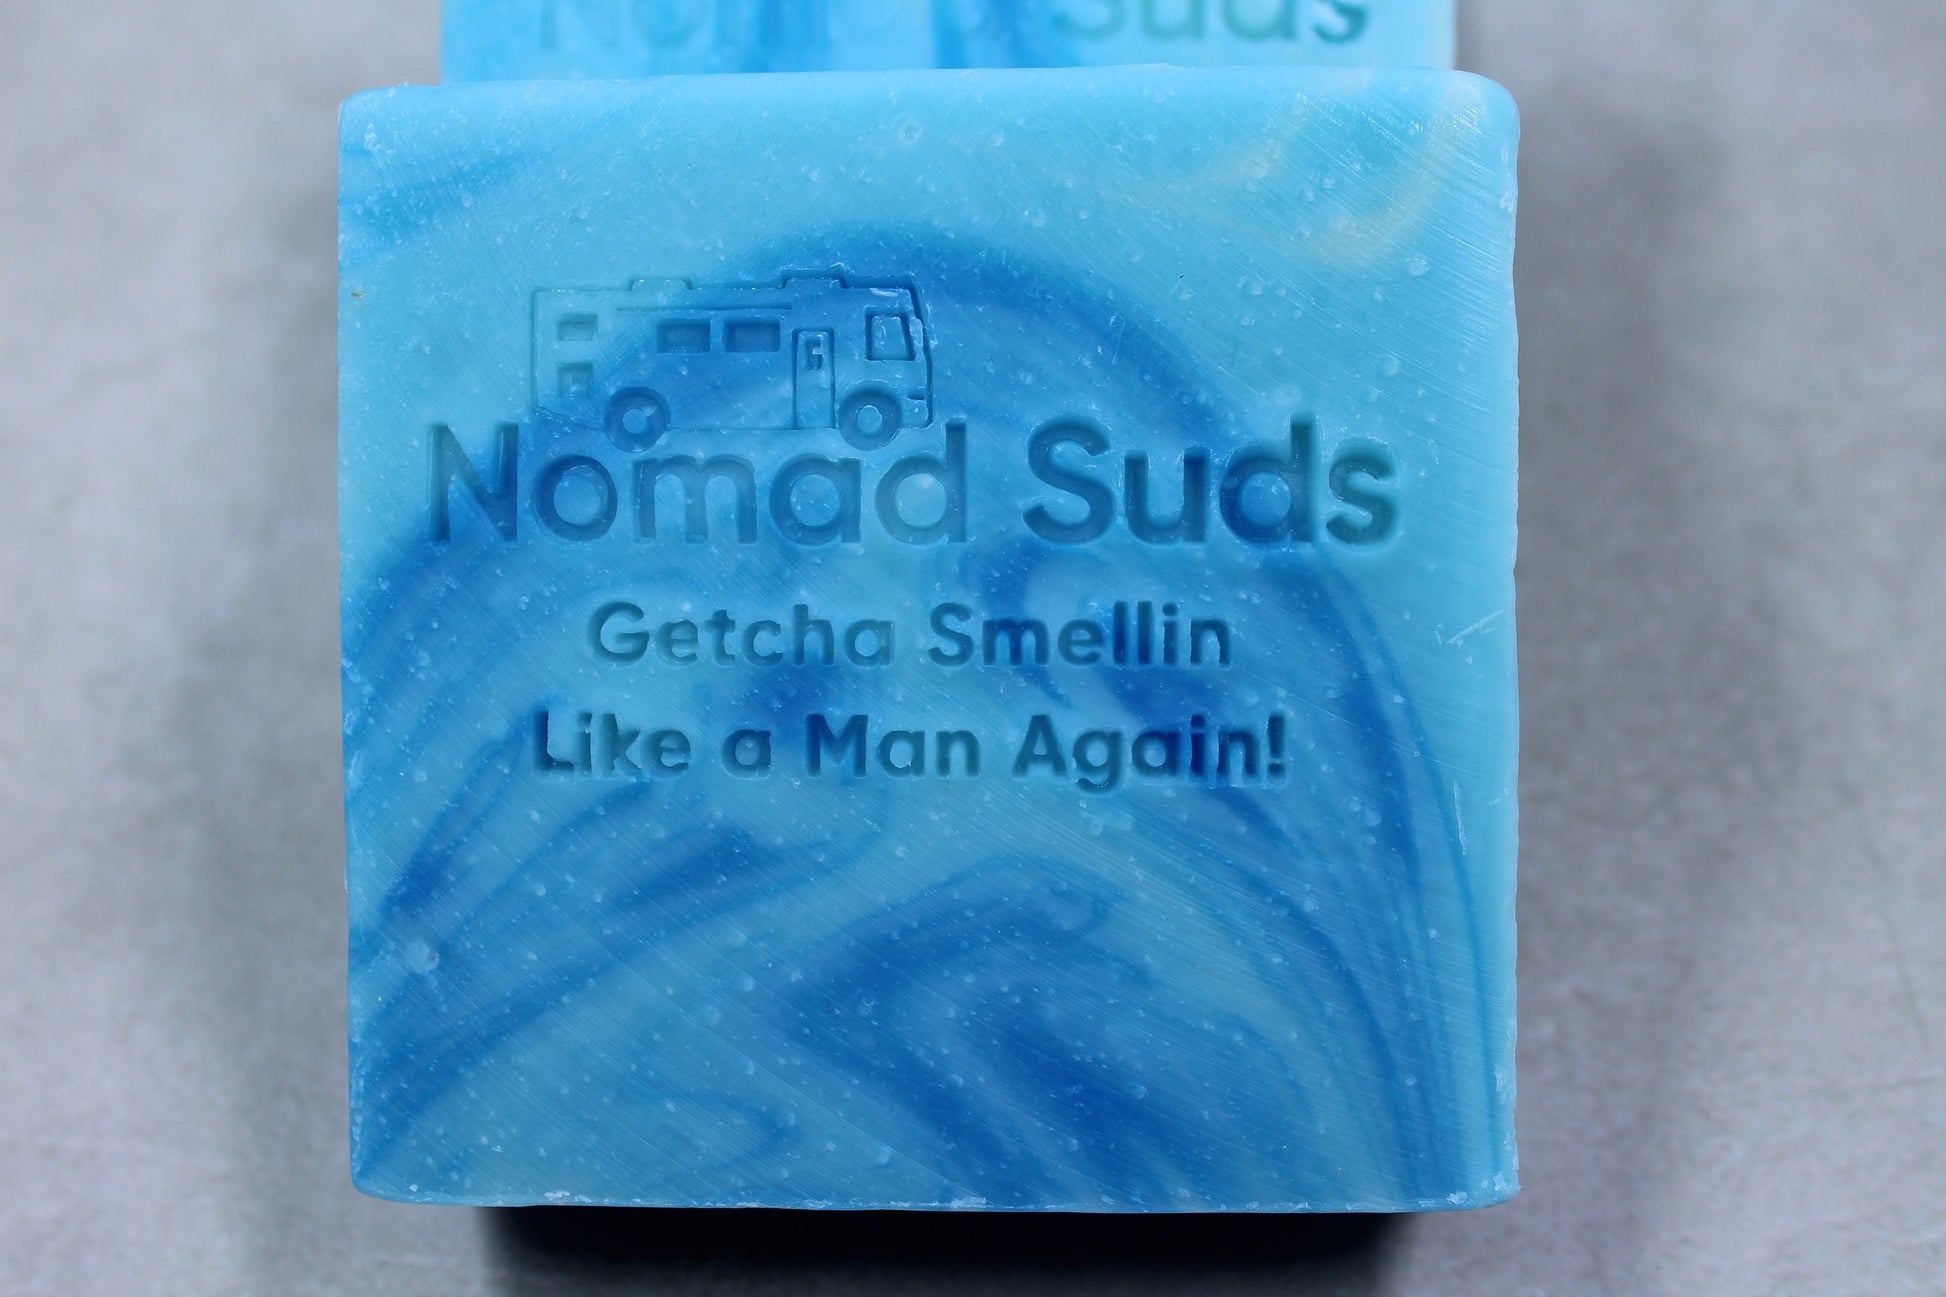 Soap Dudes Soap Co. - Natural Handmade Soap for Men & Women